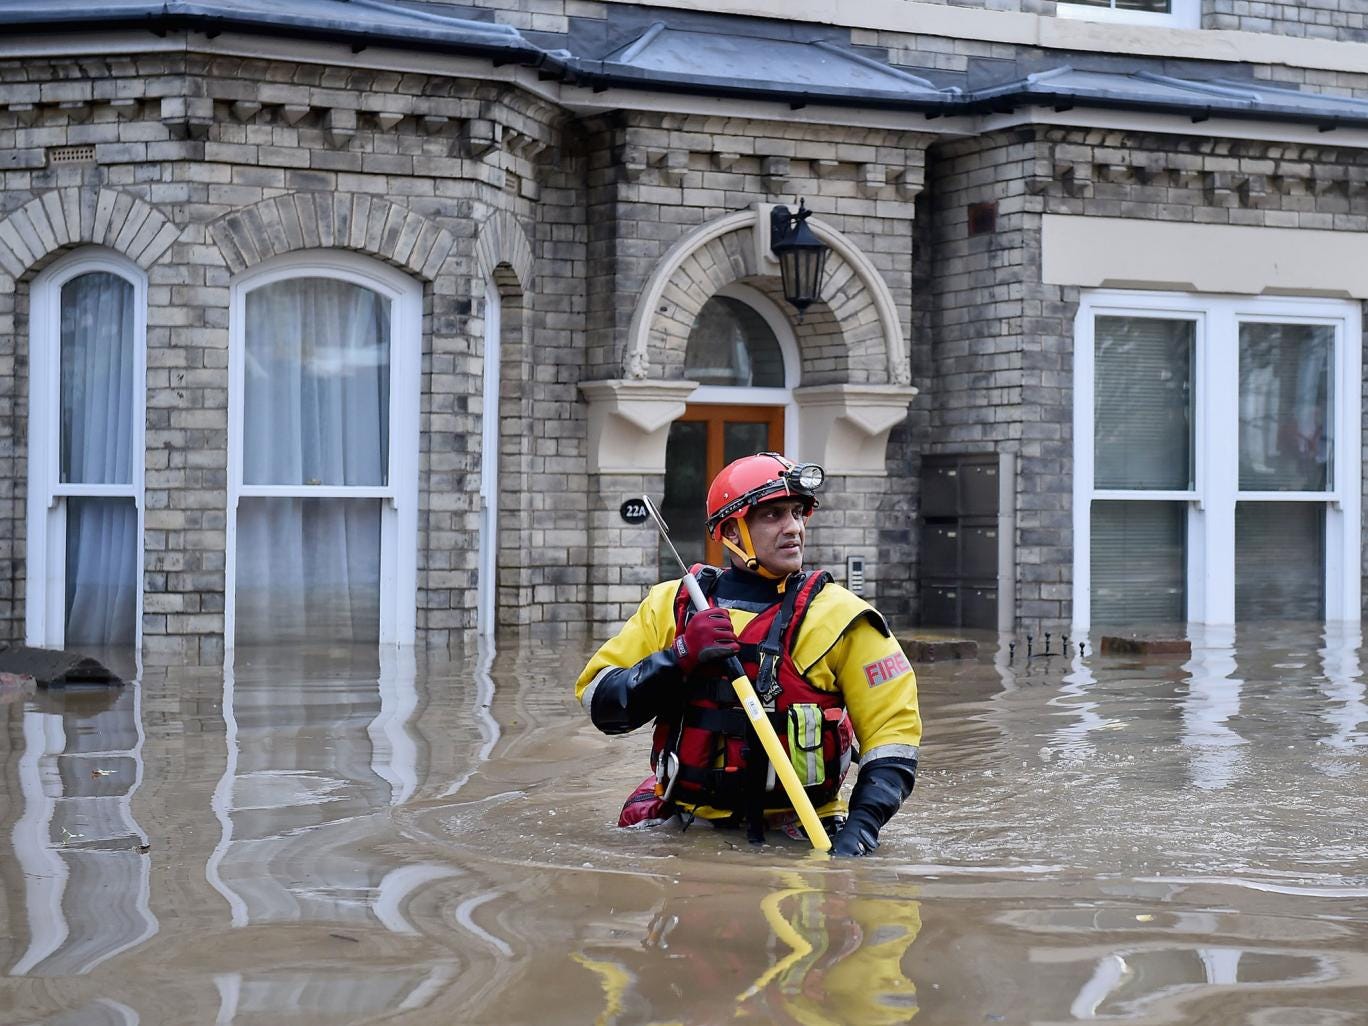 00 UK homes built on flood plains each year | H